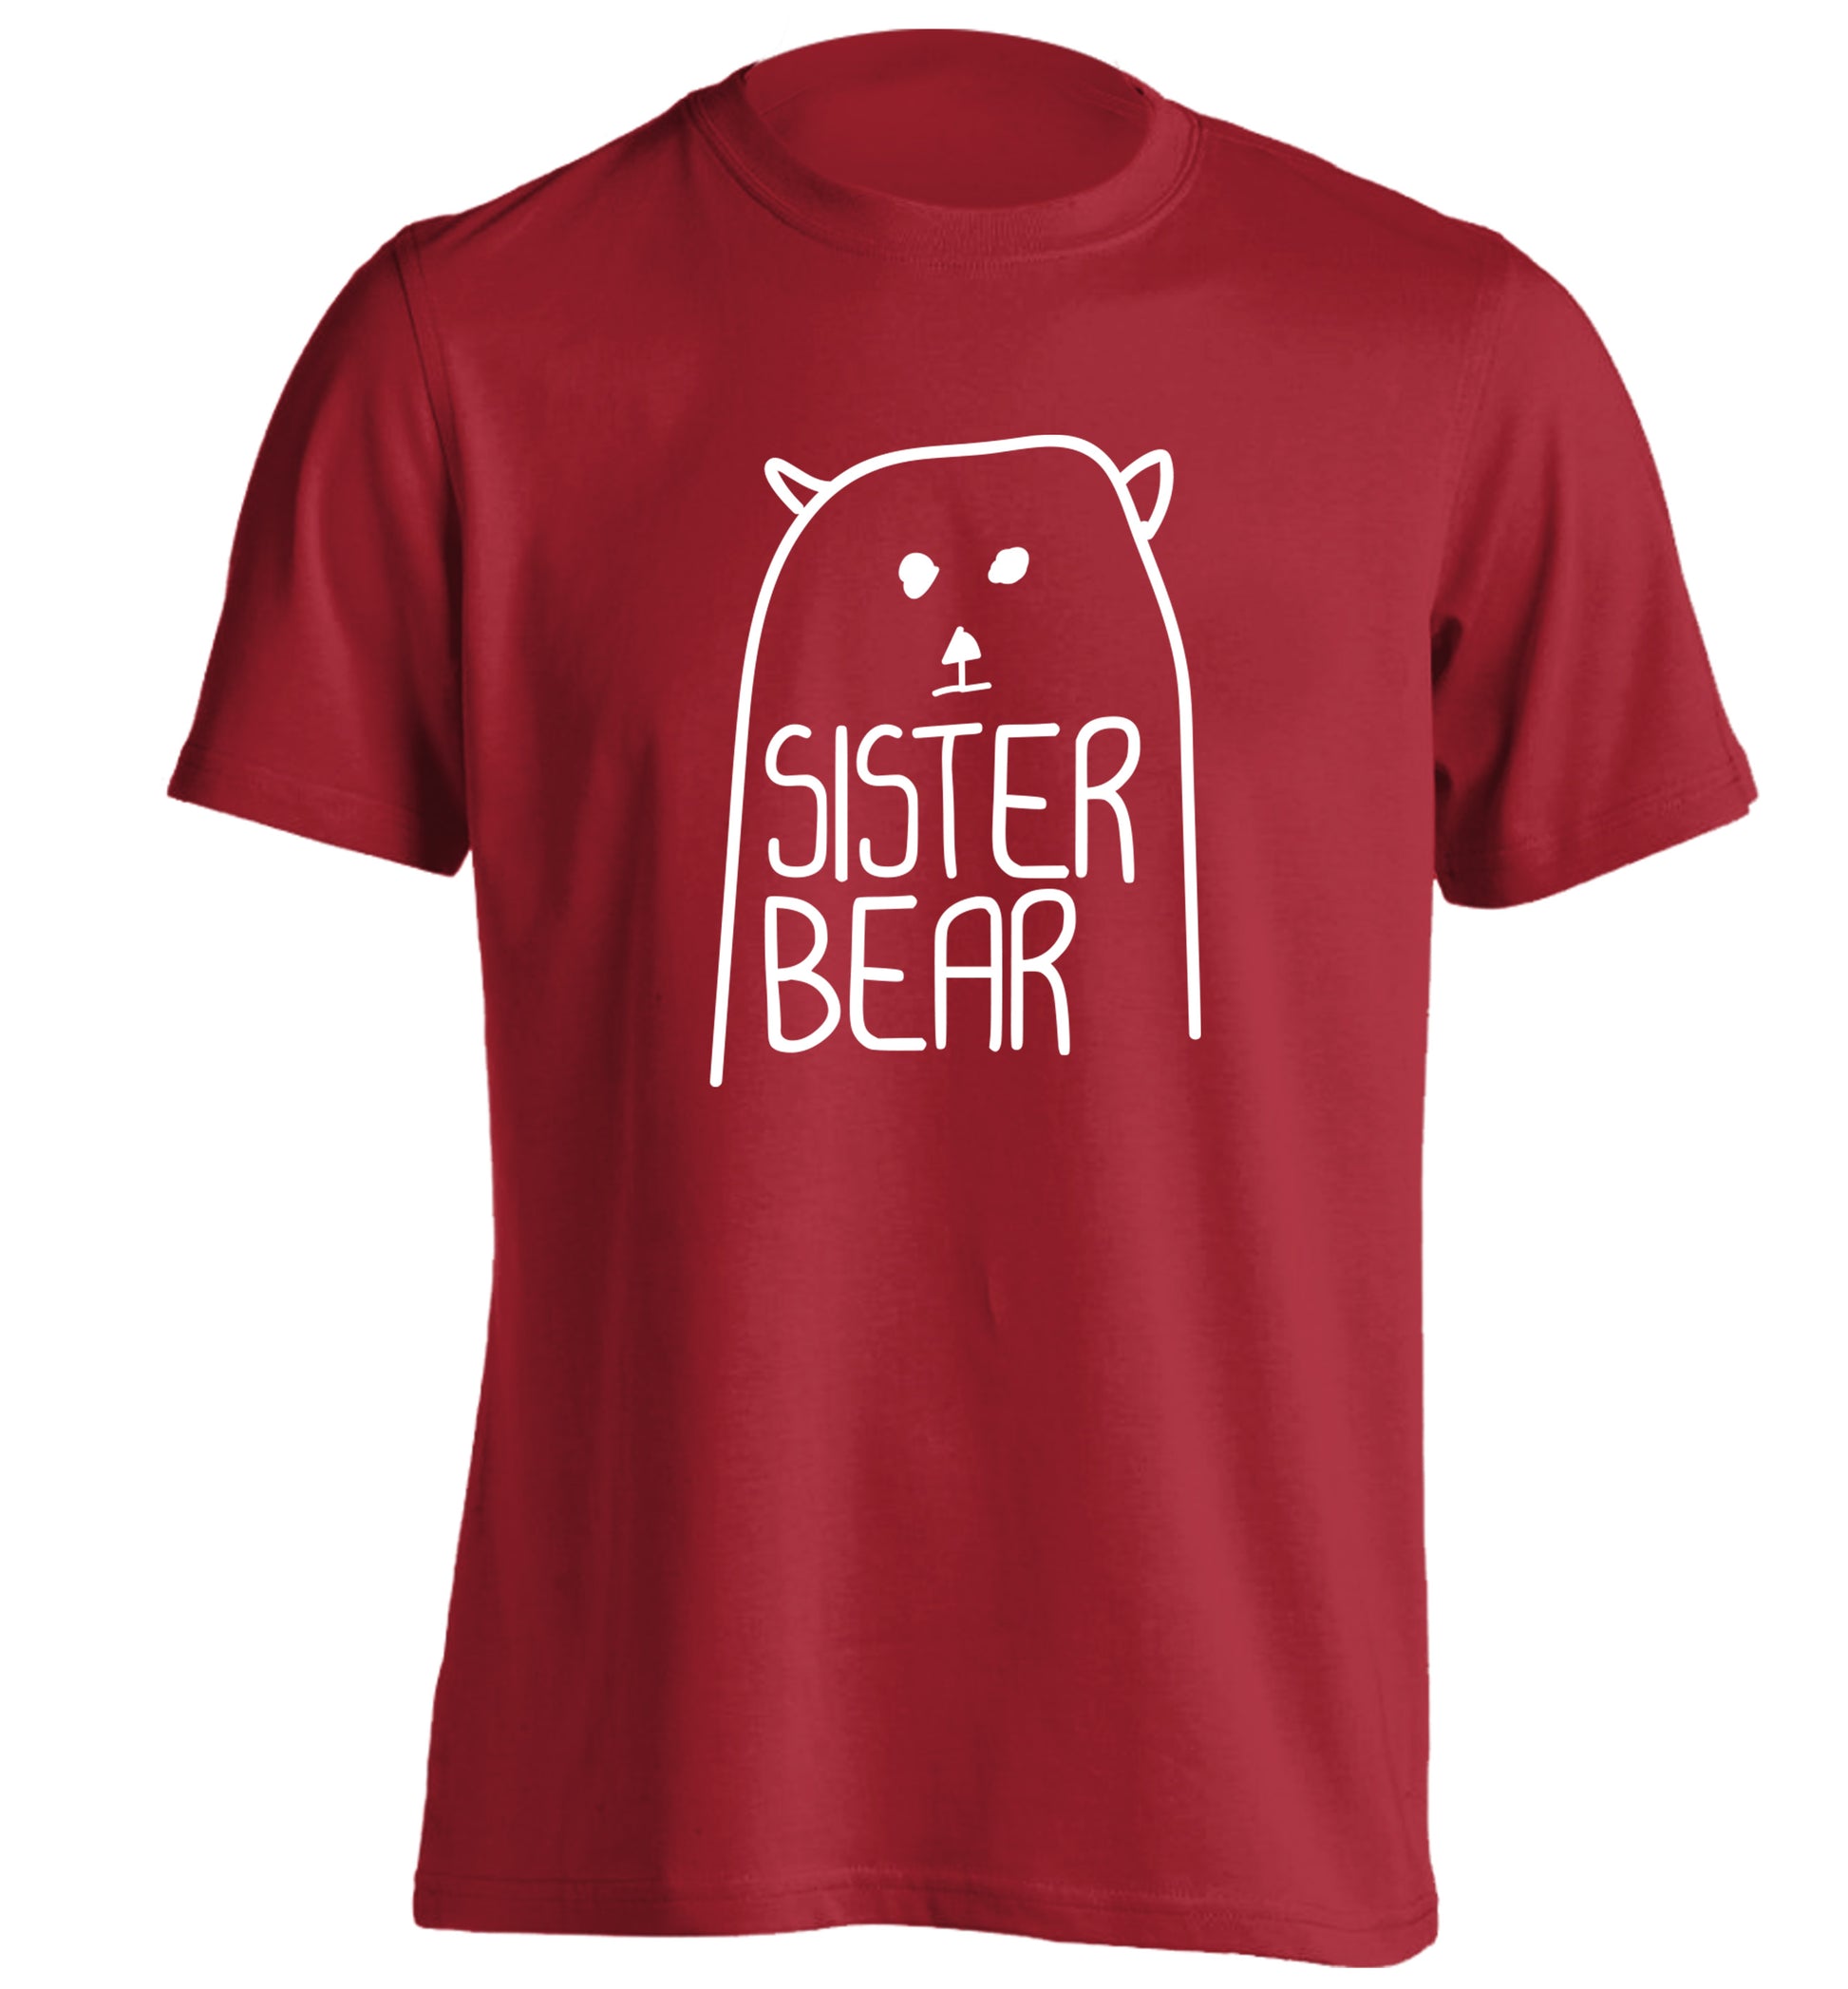 Sister bear adults unisex red Tshirt 2XL